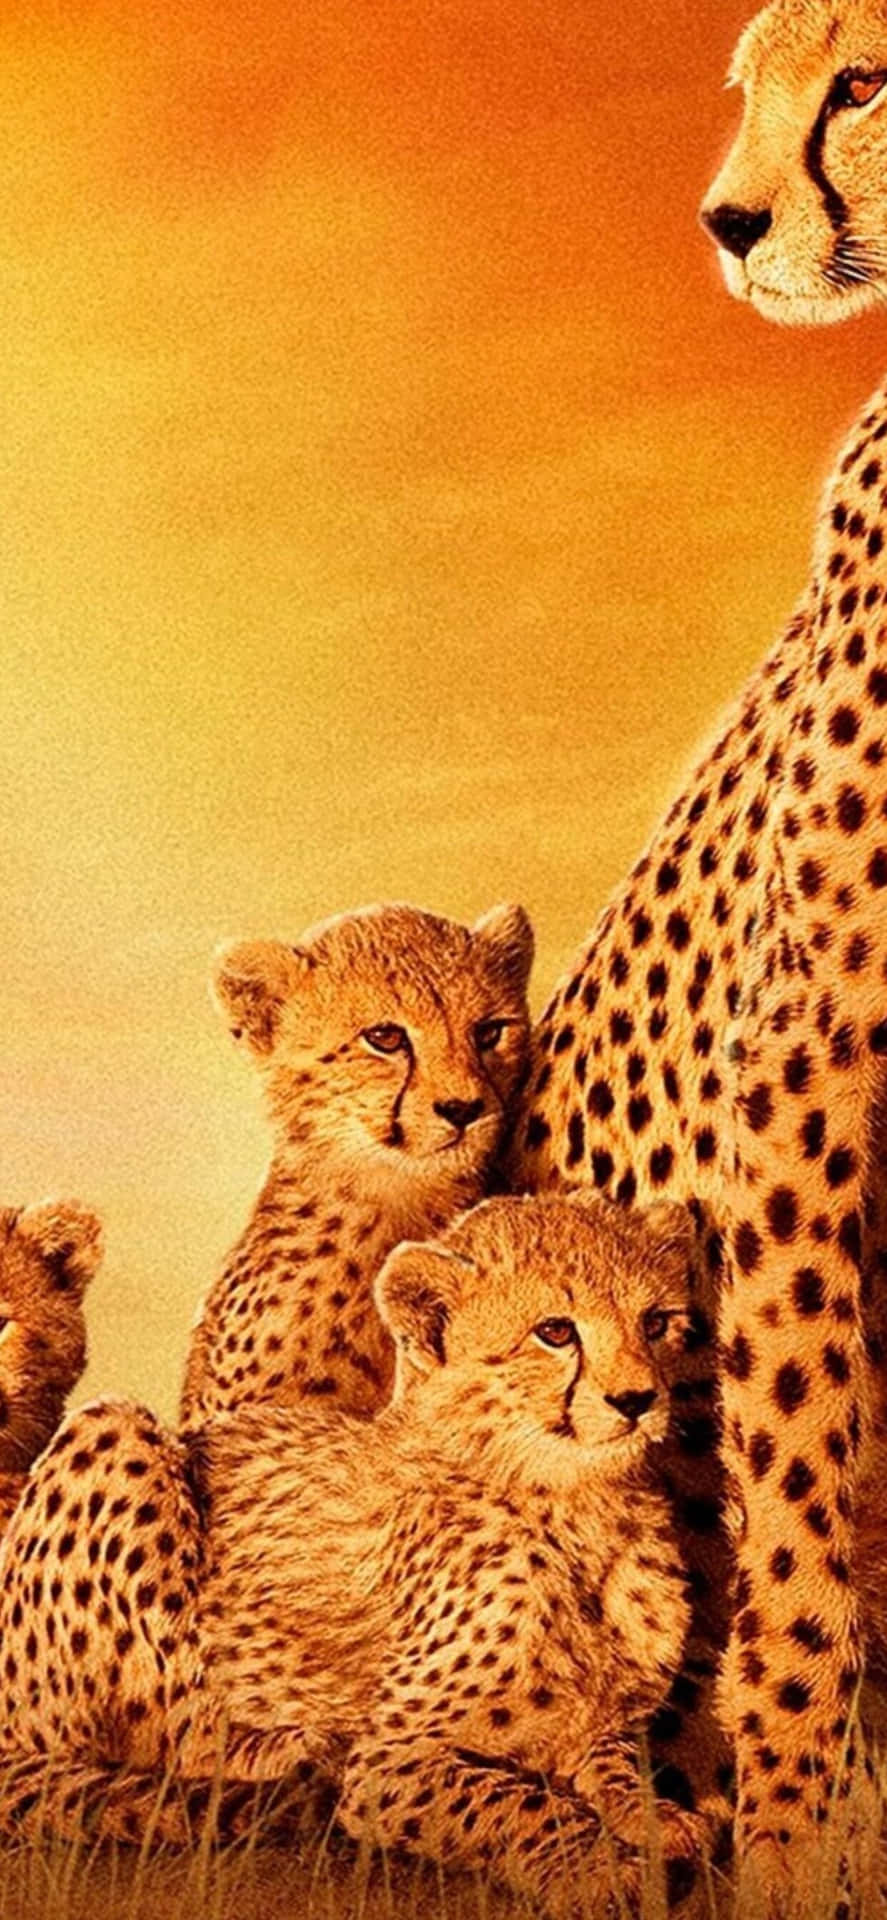 Cheetah Family Wallpapers Hd Wallpaper